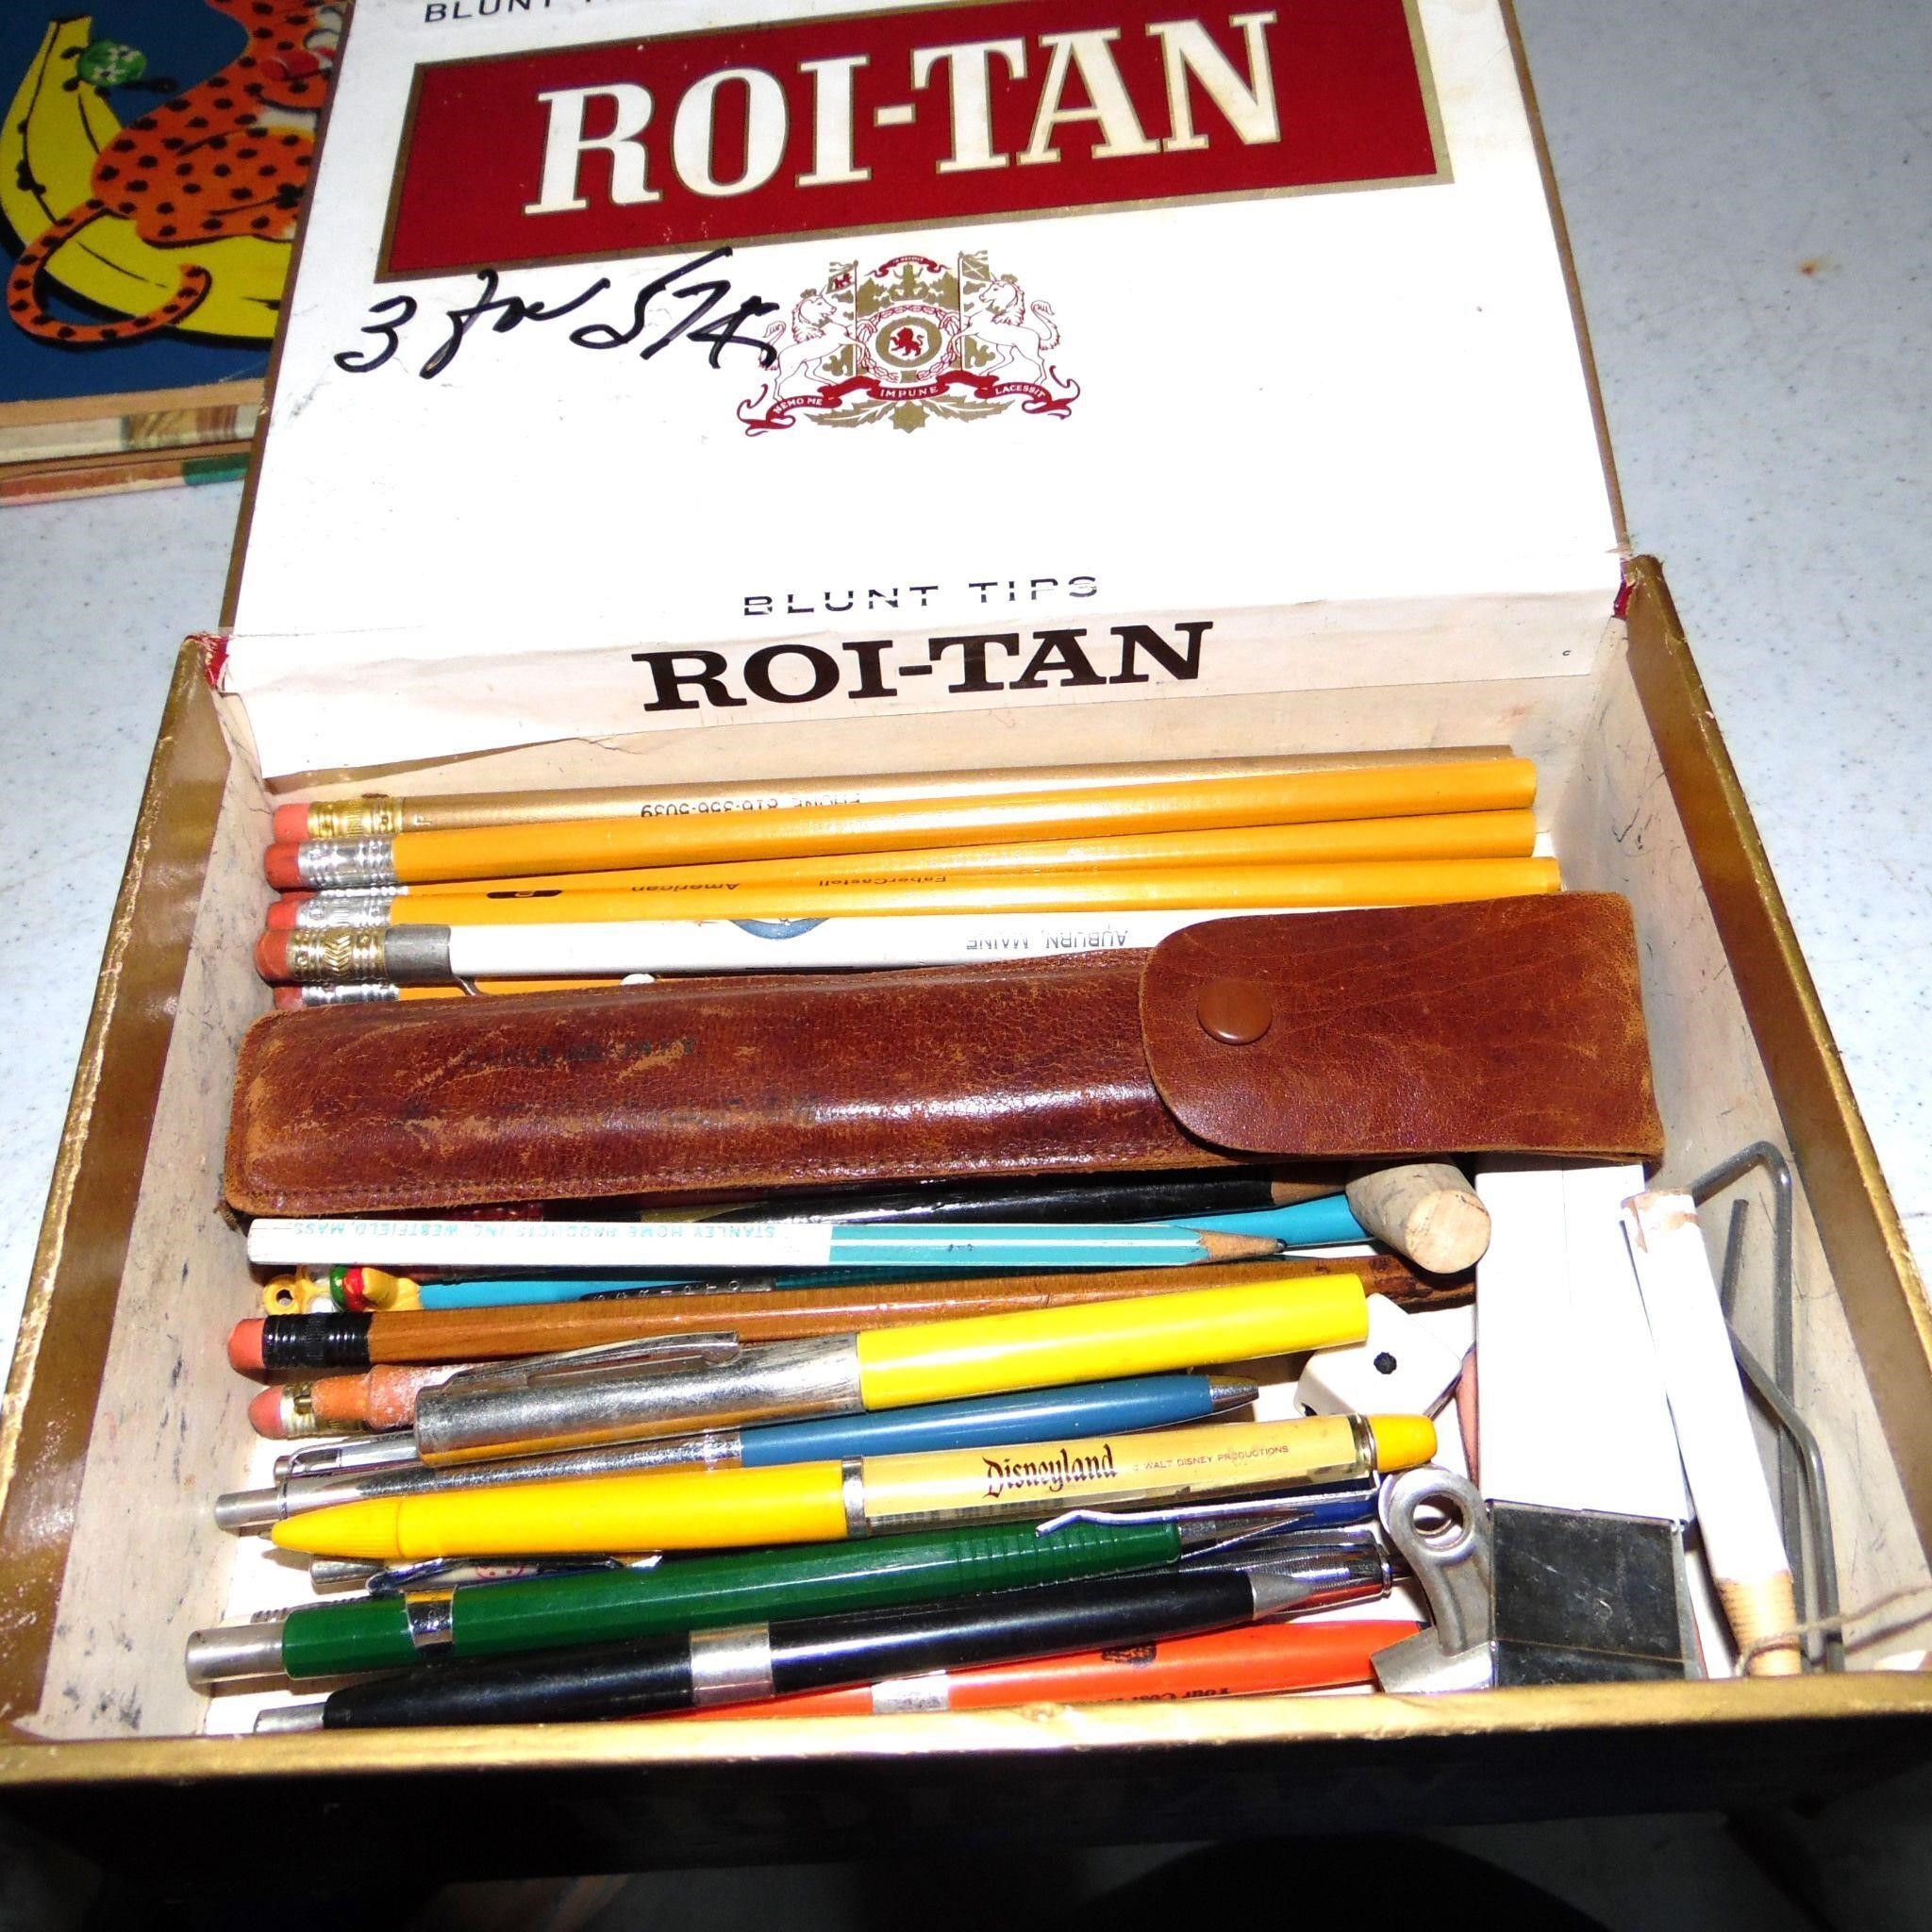 Cigar Box full of old Pencils & Pens